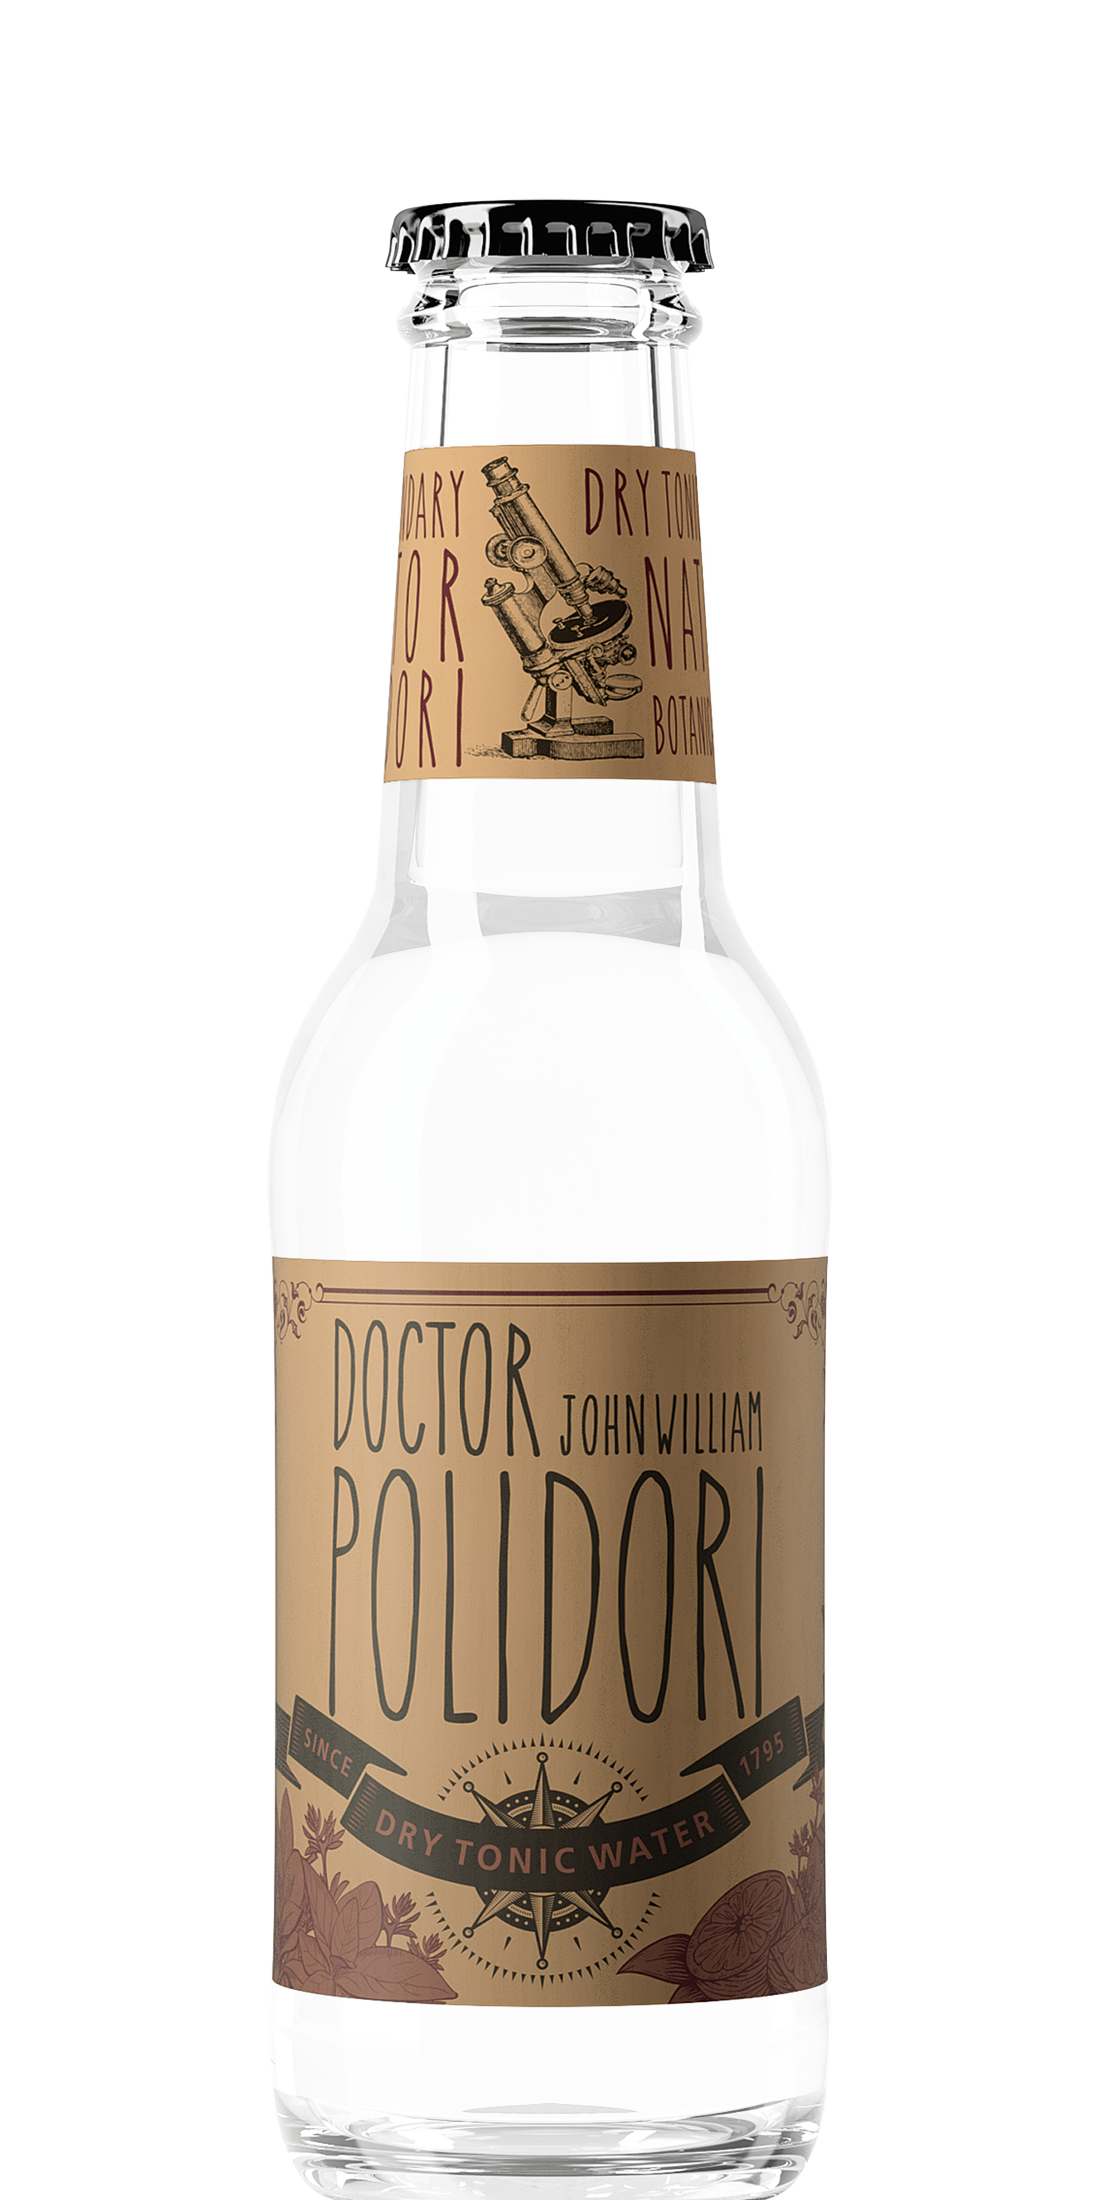 Doctor-Polidori-Dry-Tonic-Water-200ml-2200h.png